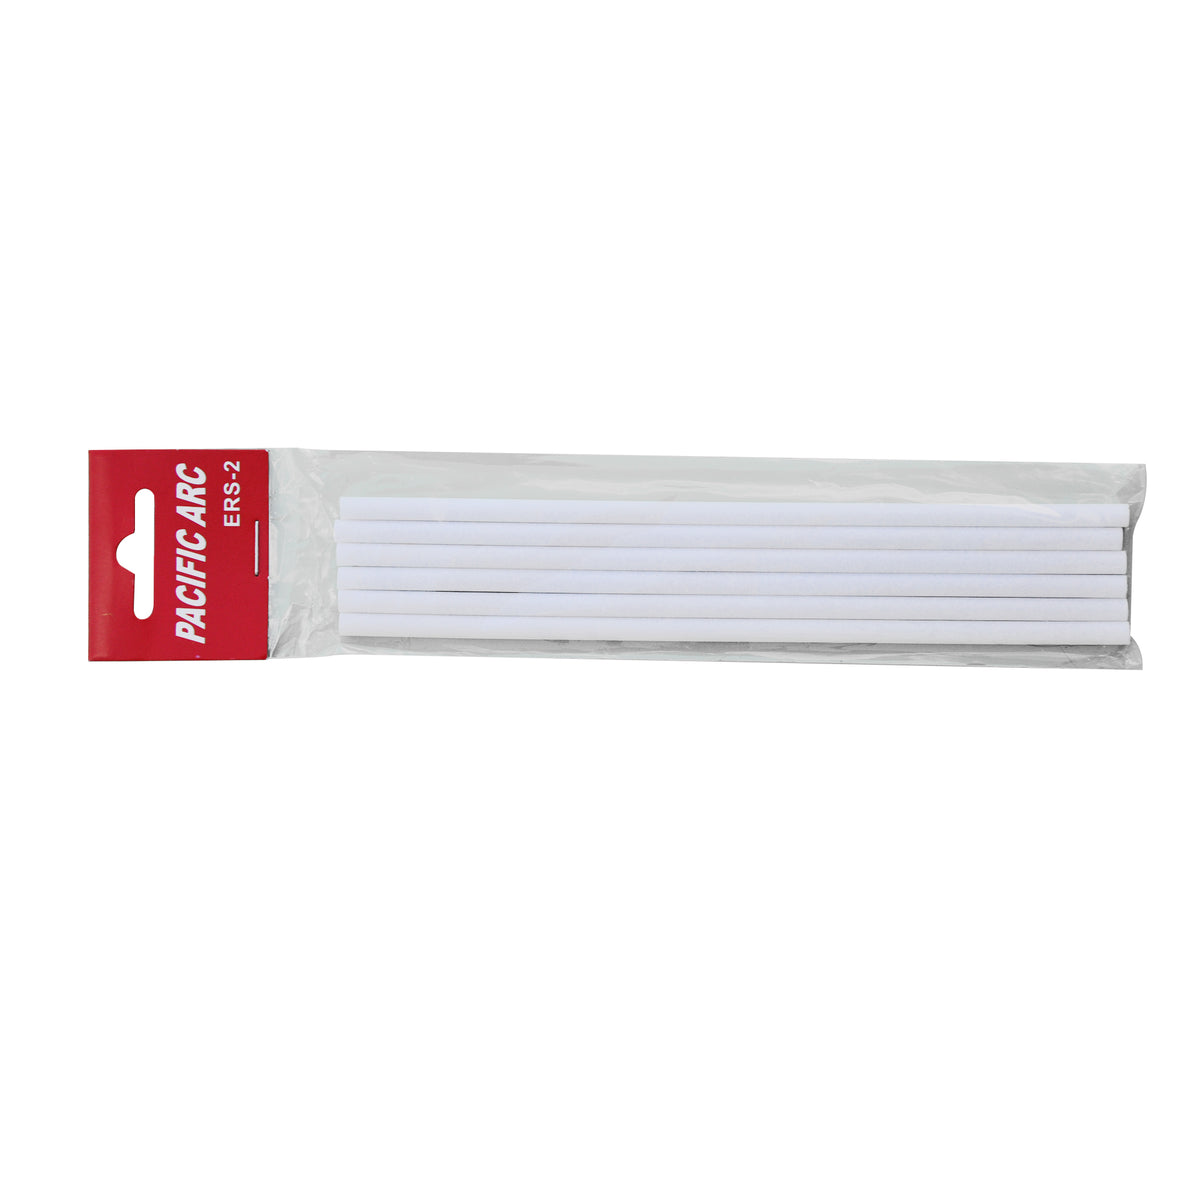 Eraser Refill - 120 mm Long - 6 pack